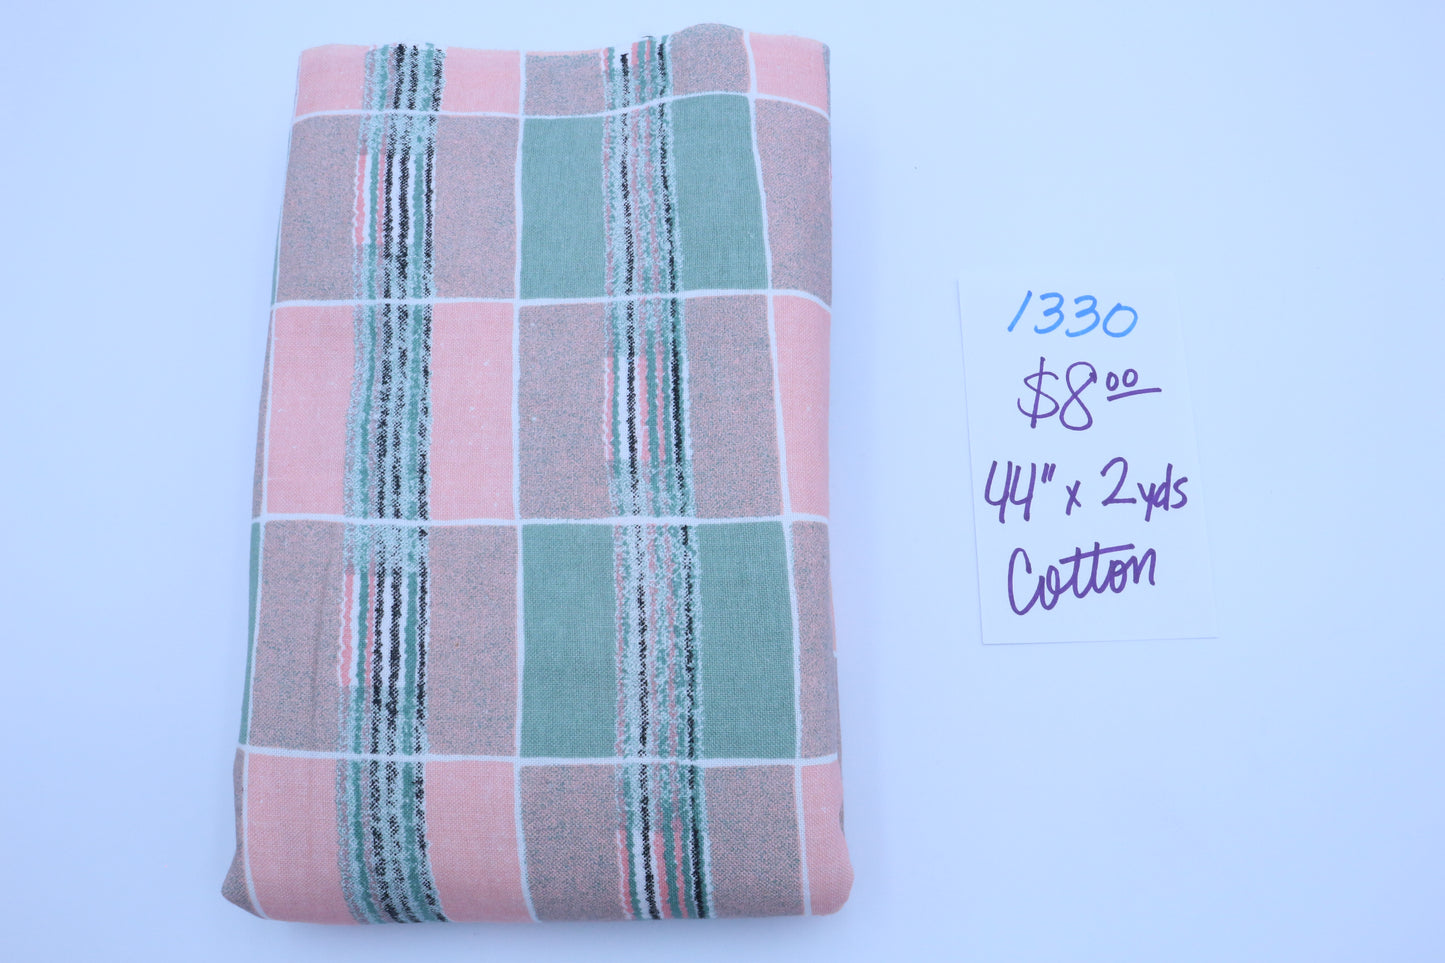 Retro Vibes Cotton Fabric 44" x 2 yds